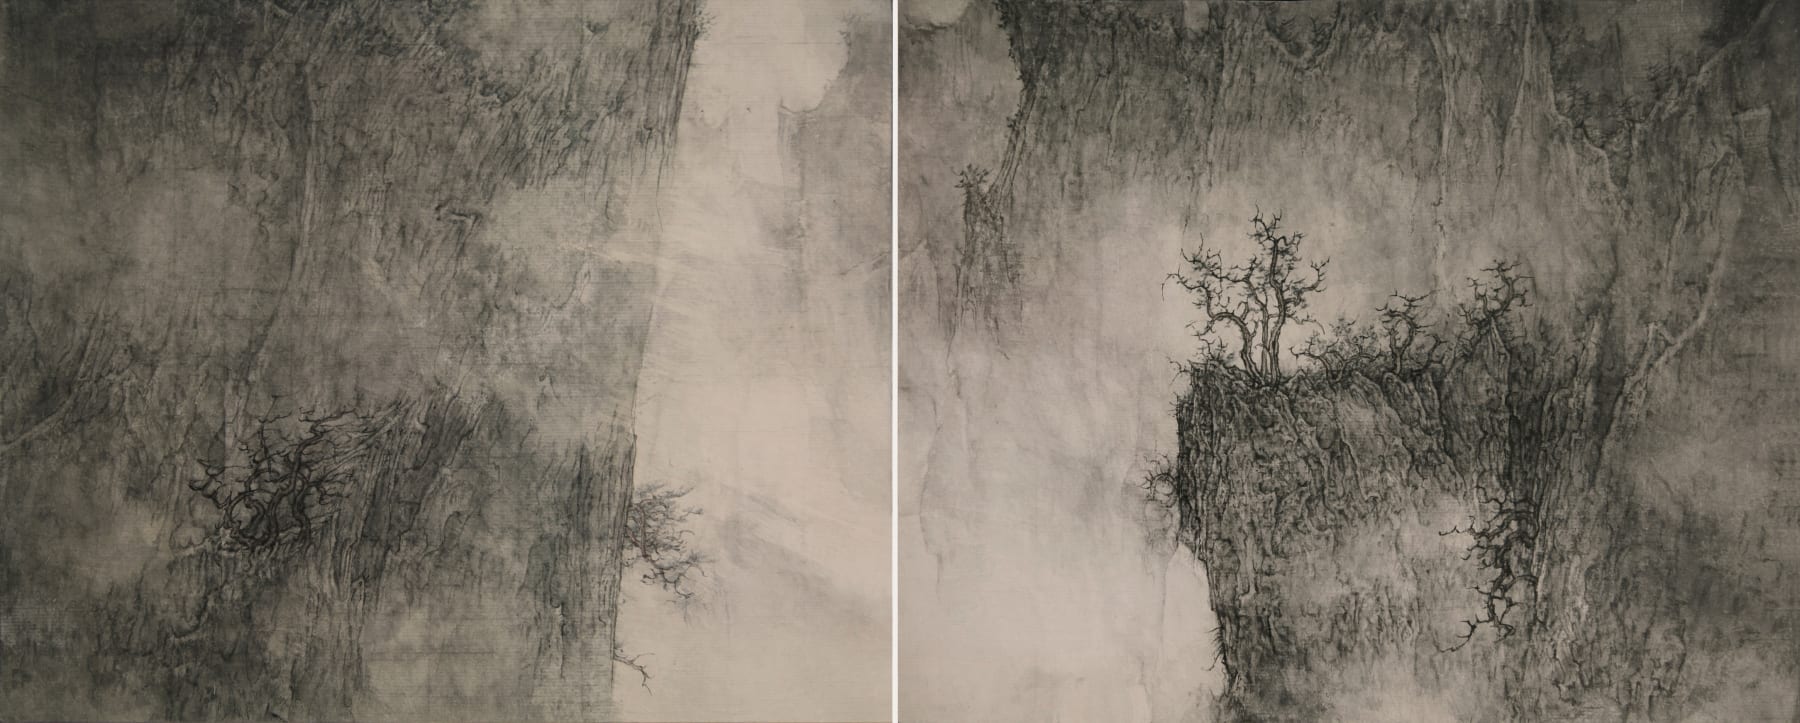 Li Huayi 李華弌, Pureland Mist 《淨土飄渺》, 2011